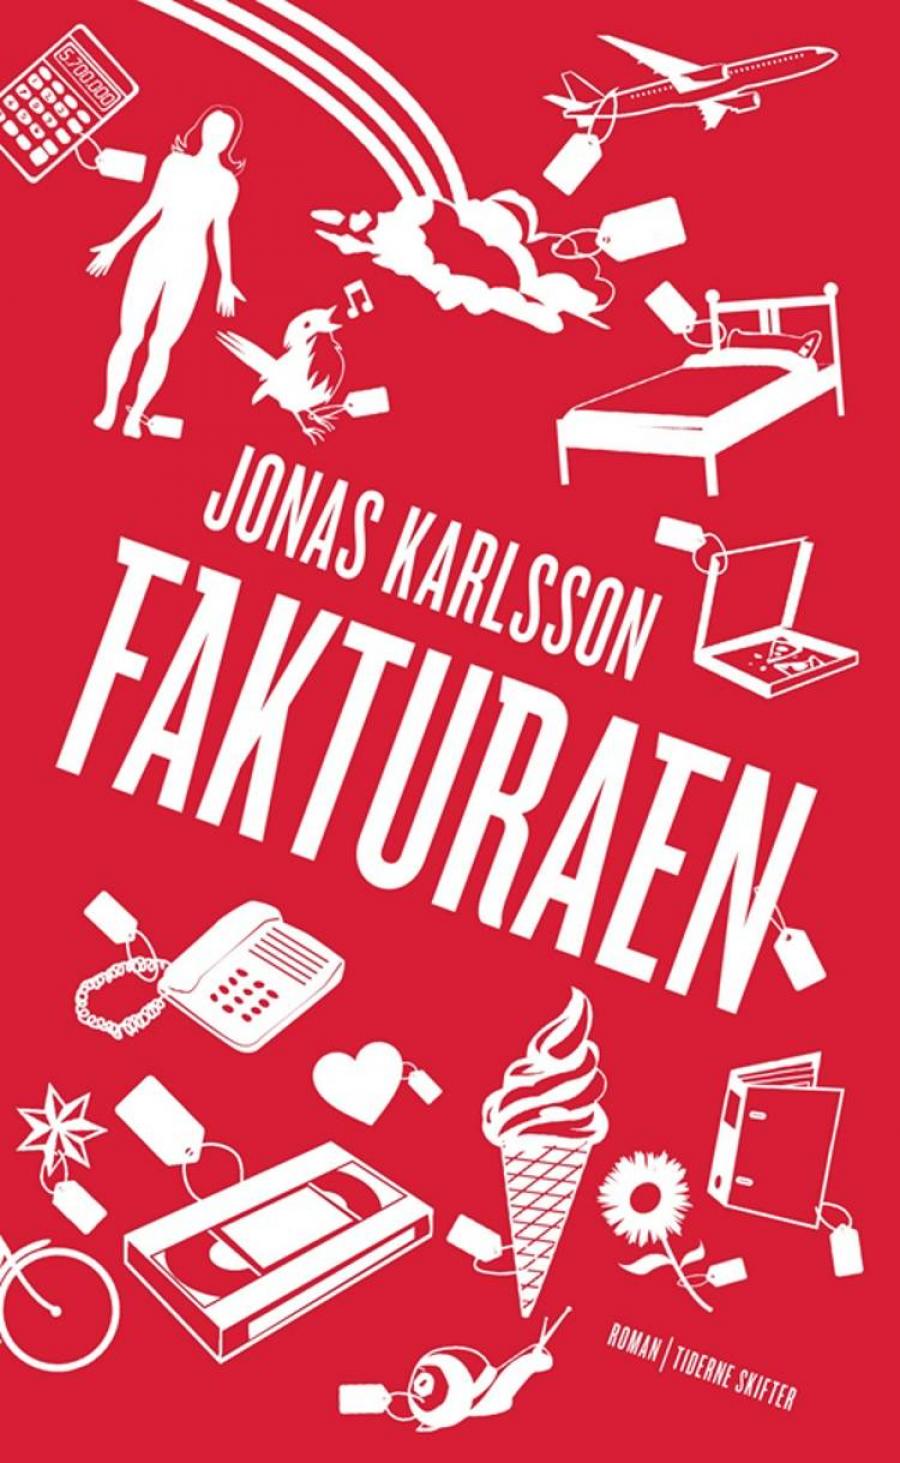 Fakturaen af Jonas Karlsson